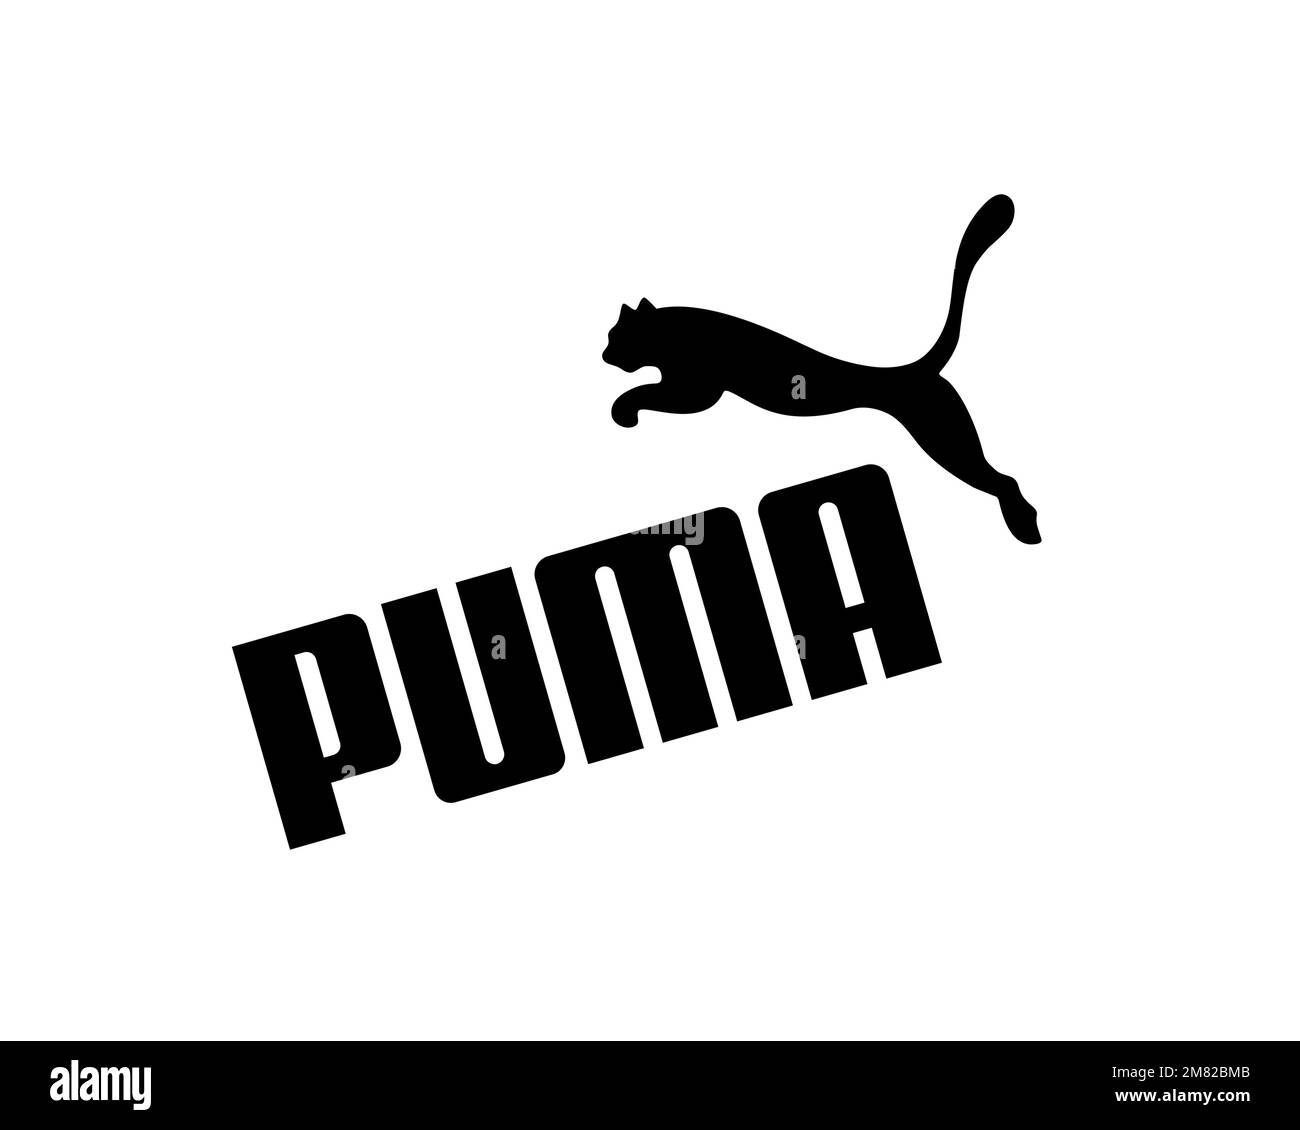 Cougar brand, rotated logo, white background Stock Photo - Alamy